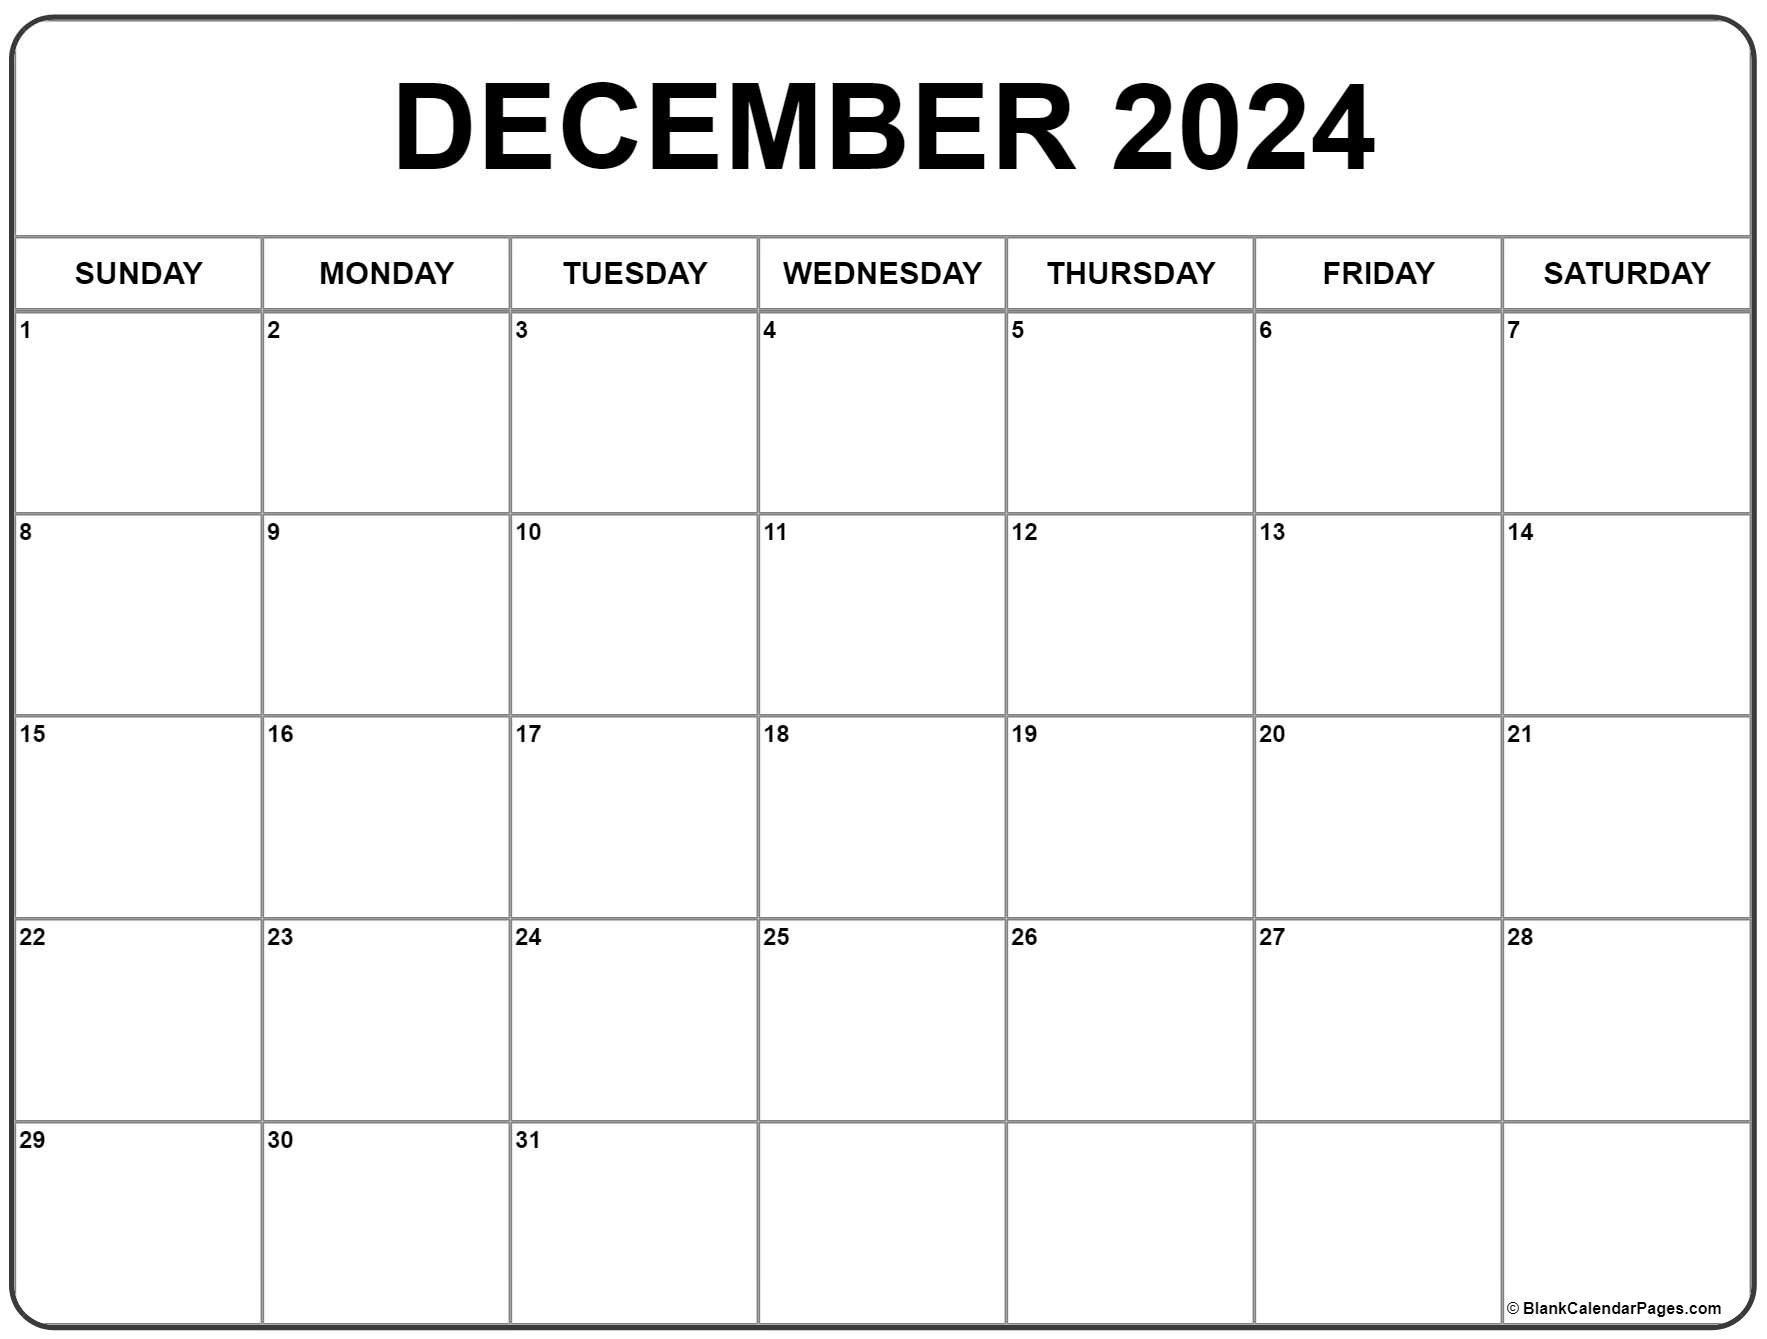 December 2024 Calendar | Free Printable Calendar intended for Free Printable Calendar 2024 Dec